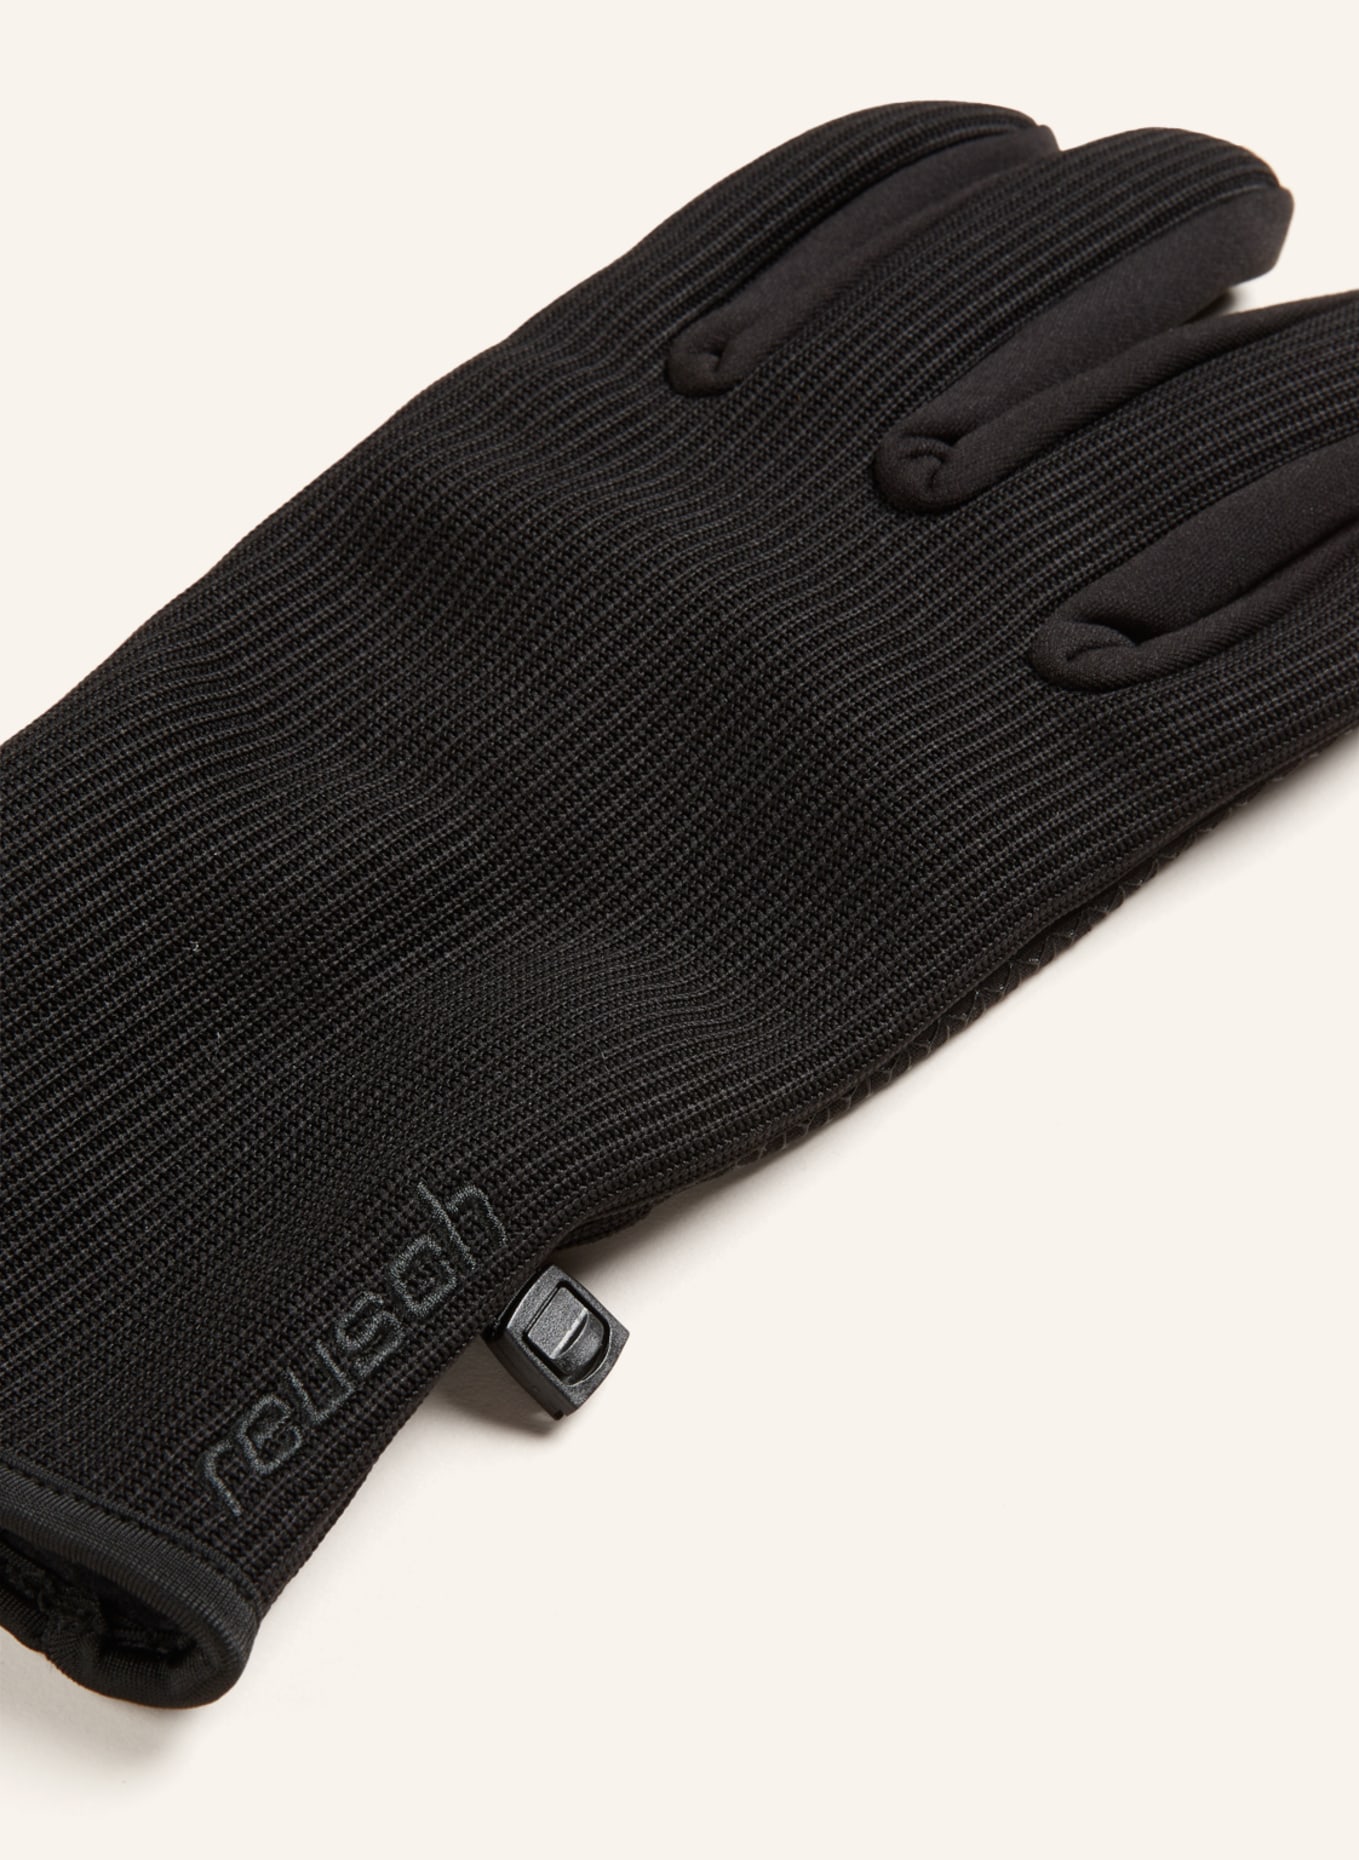 TOUCH-TEC™ mit Touchscreen-Funktion in MATE Multisport-Handschuhe reusch schwarz